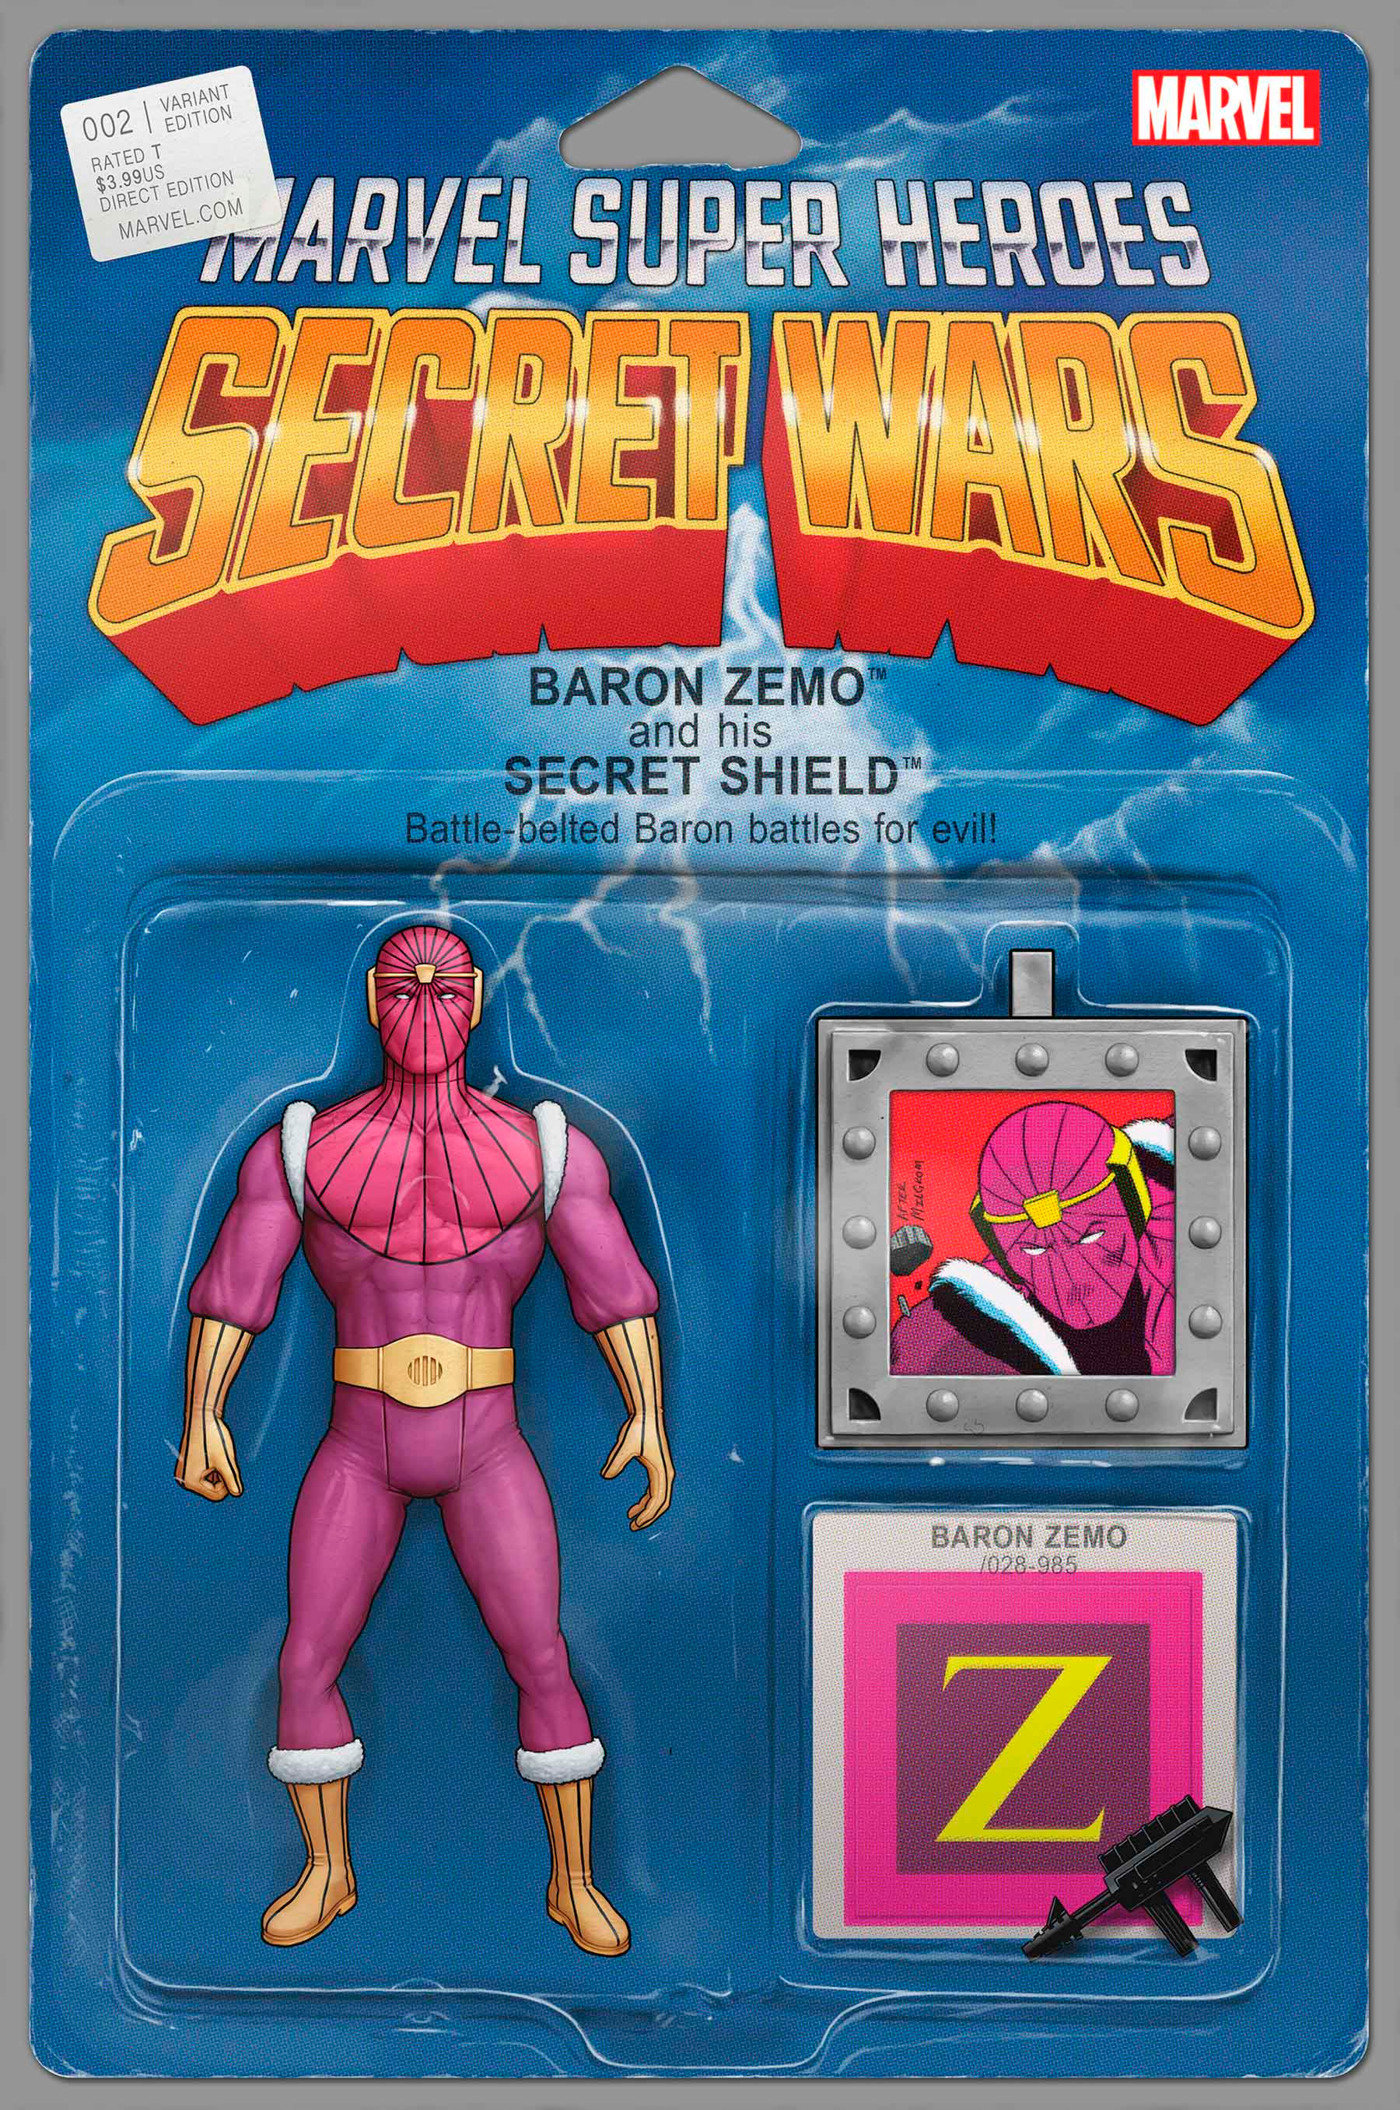 Marvel Super Heroes Secret Wars Battleworld #2 John Tyler Christopher Action Figure Variant